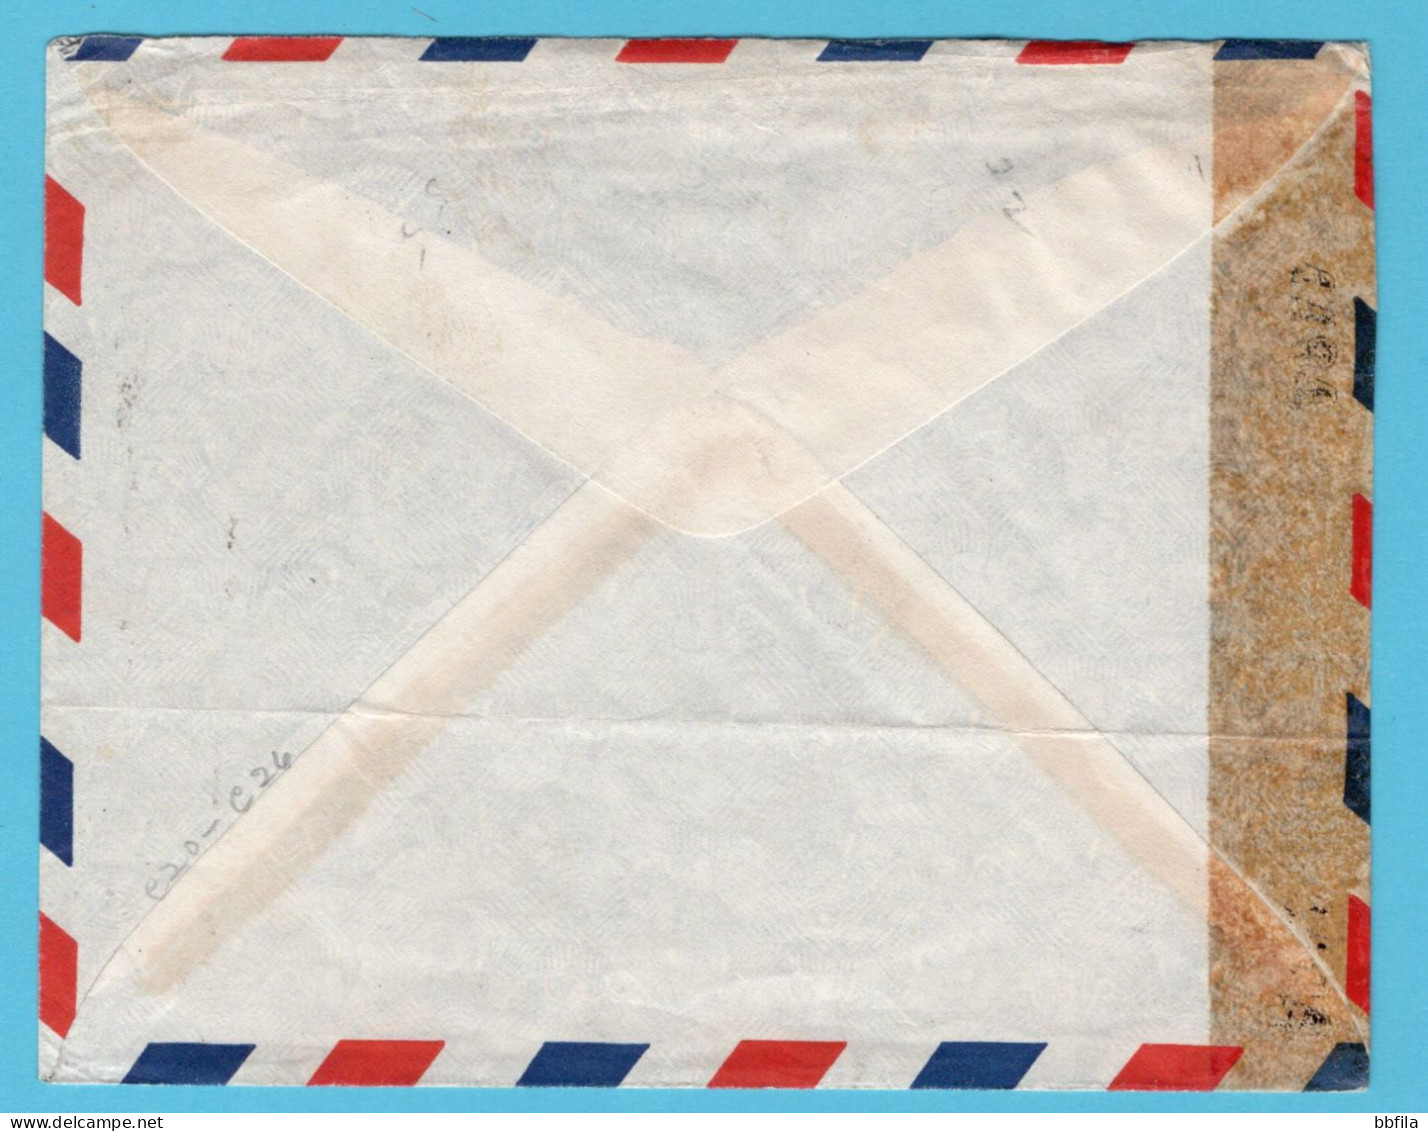 CURAÇAO Luchtpost Censuur Brief 1943 Curaçao Naar Miami, USA - Curacao, Netherlands Antilles, Aruba